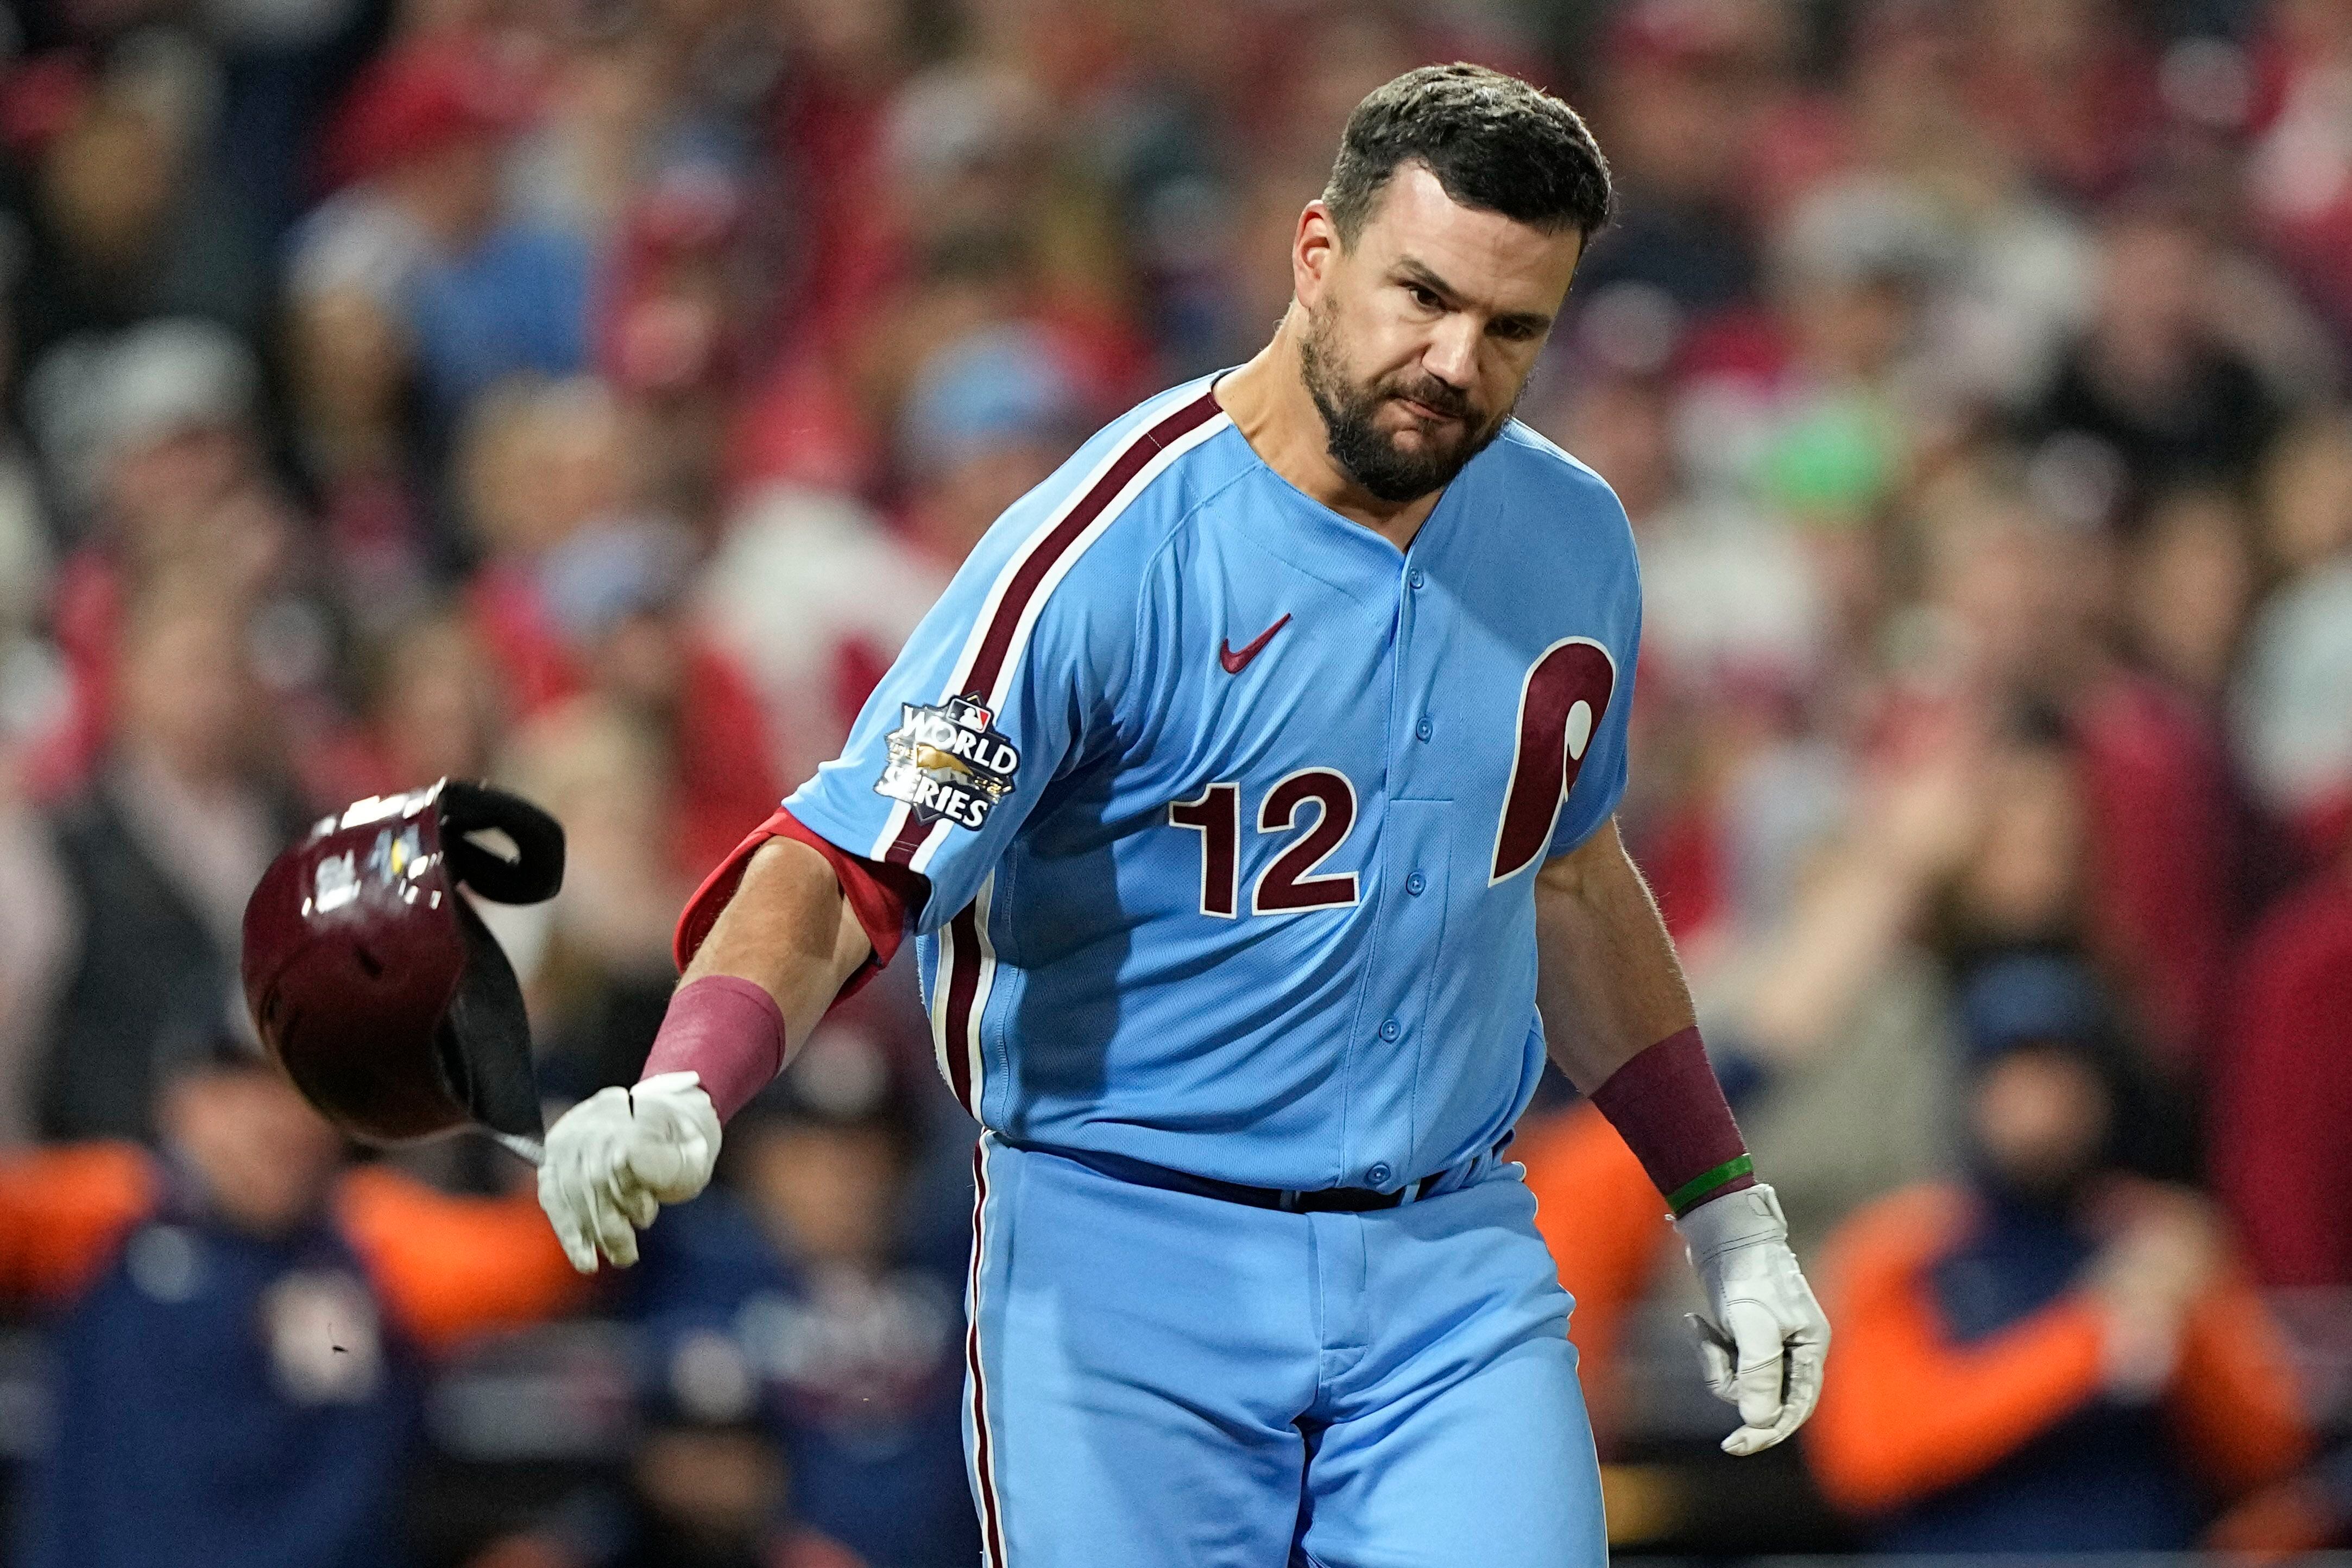 Houston Astros: Jeremy Peña adds his mark on World Series stage